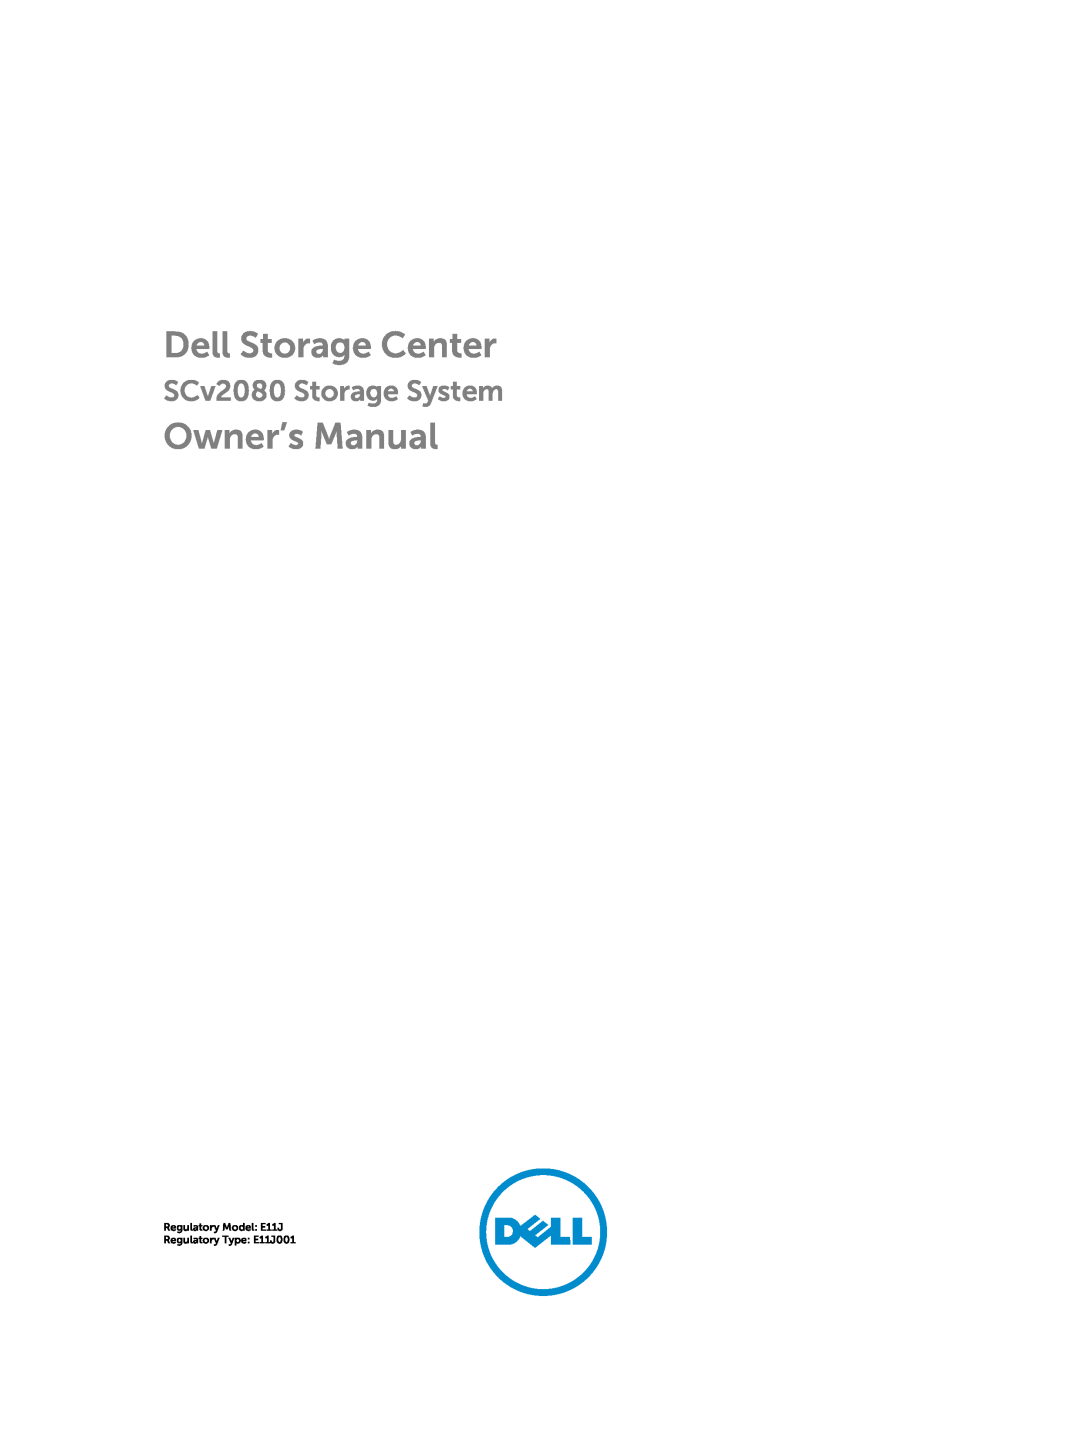 Dell E11J001 owner manual Dell Storage Center, Owner’s Manual, SCv2080 Storage System 